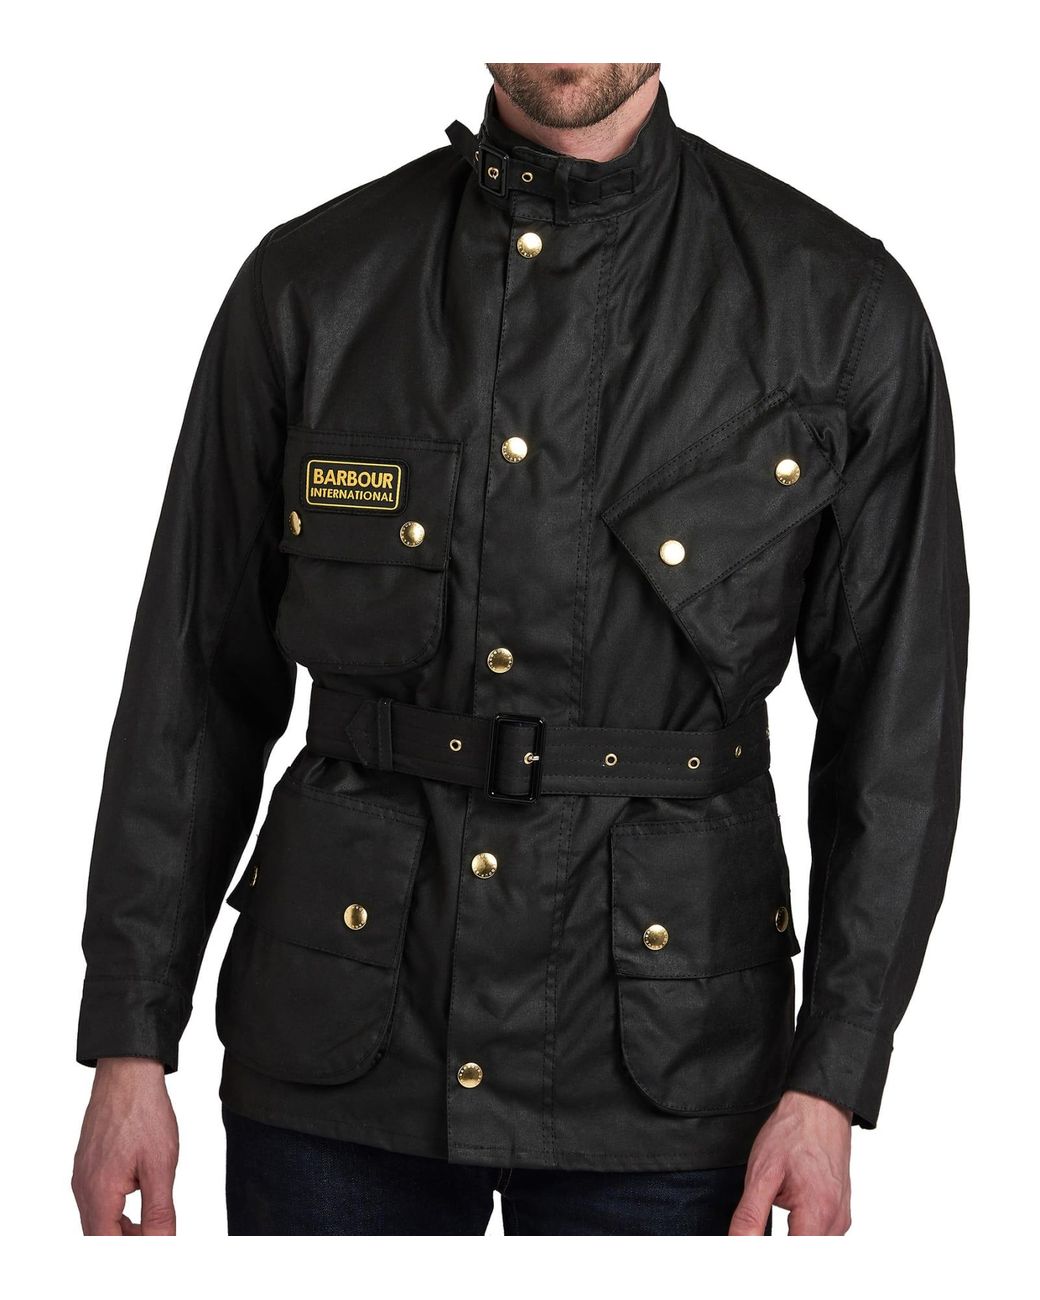 Barbour B.intl Original Waxed Jacket Mwx0004bk51 in Black for Men 